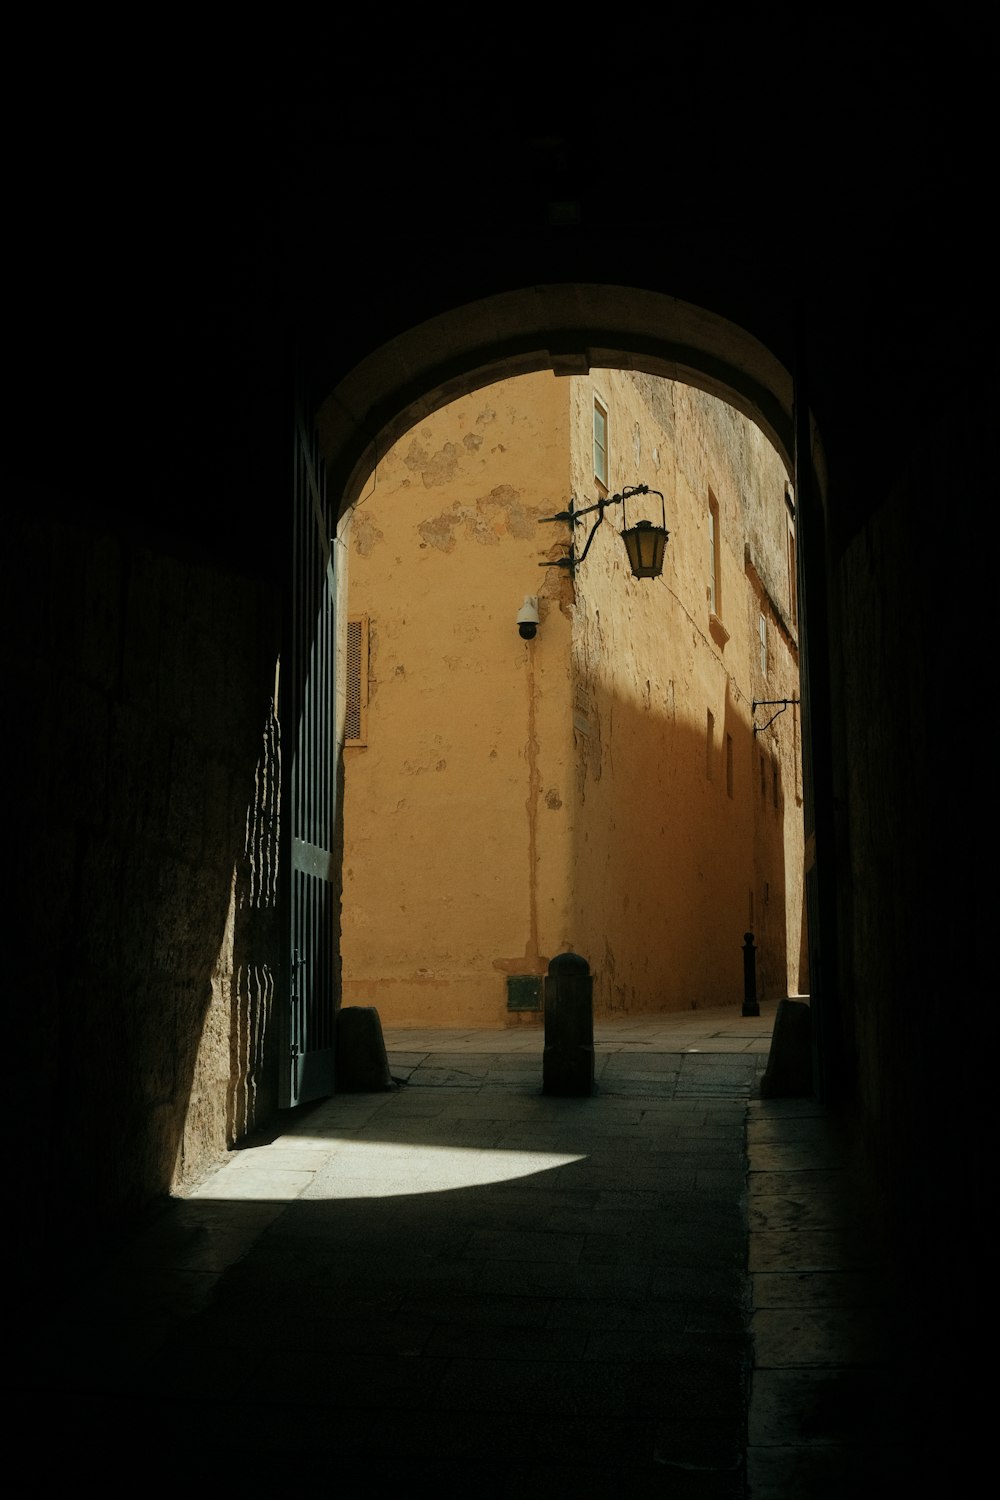 a dark alley way with an iron gate